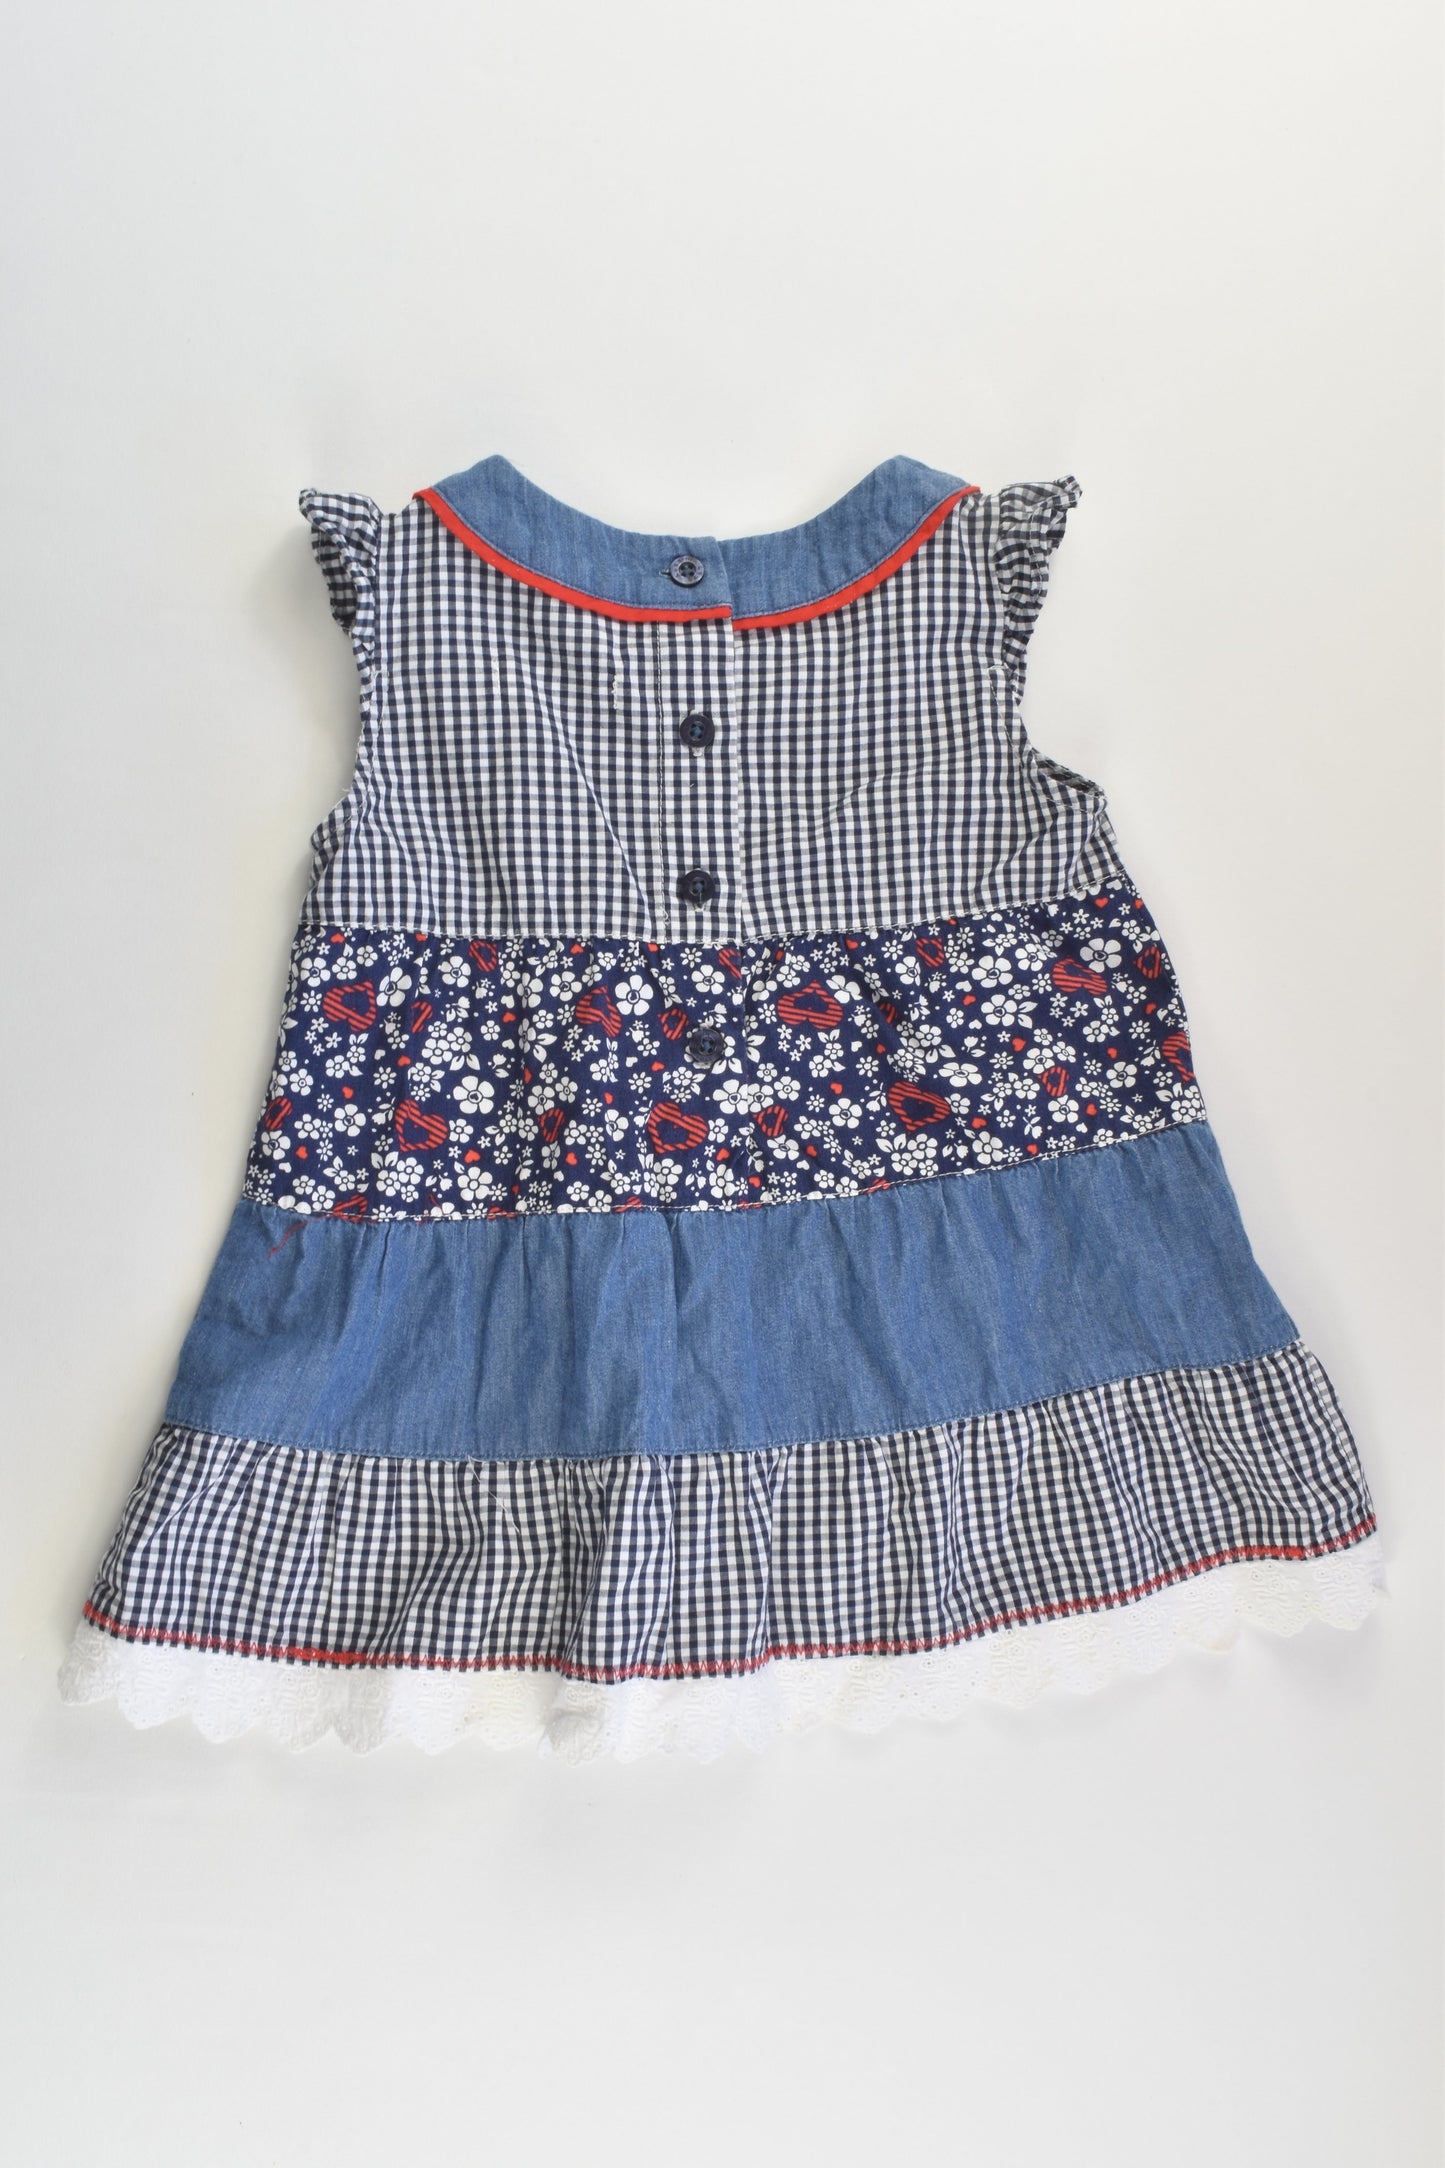 Bossini Baby Size 1 (12-18 months) Dress